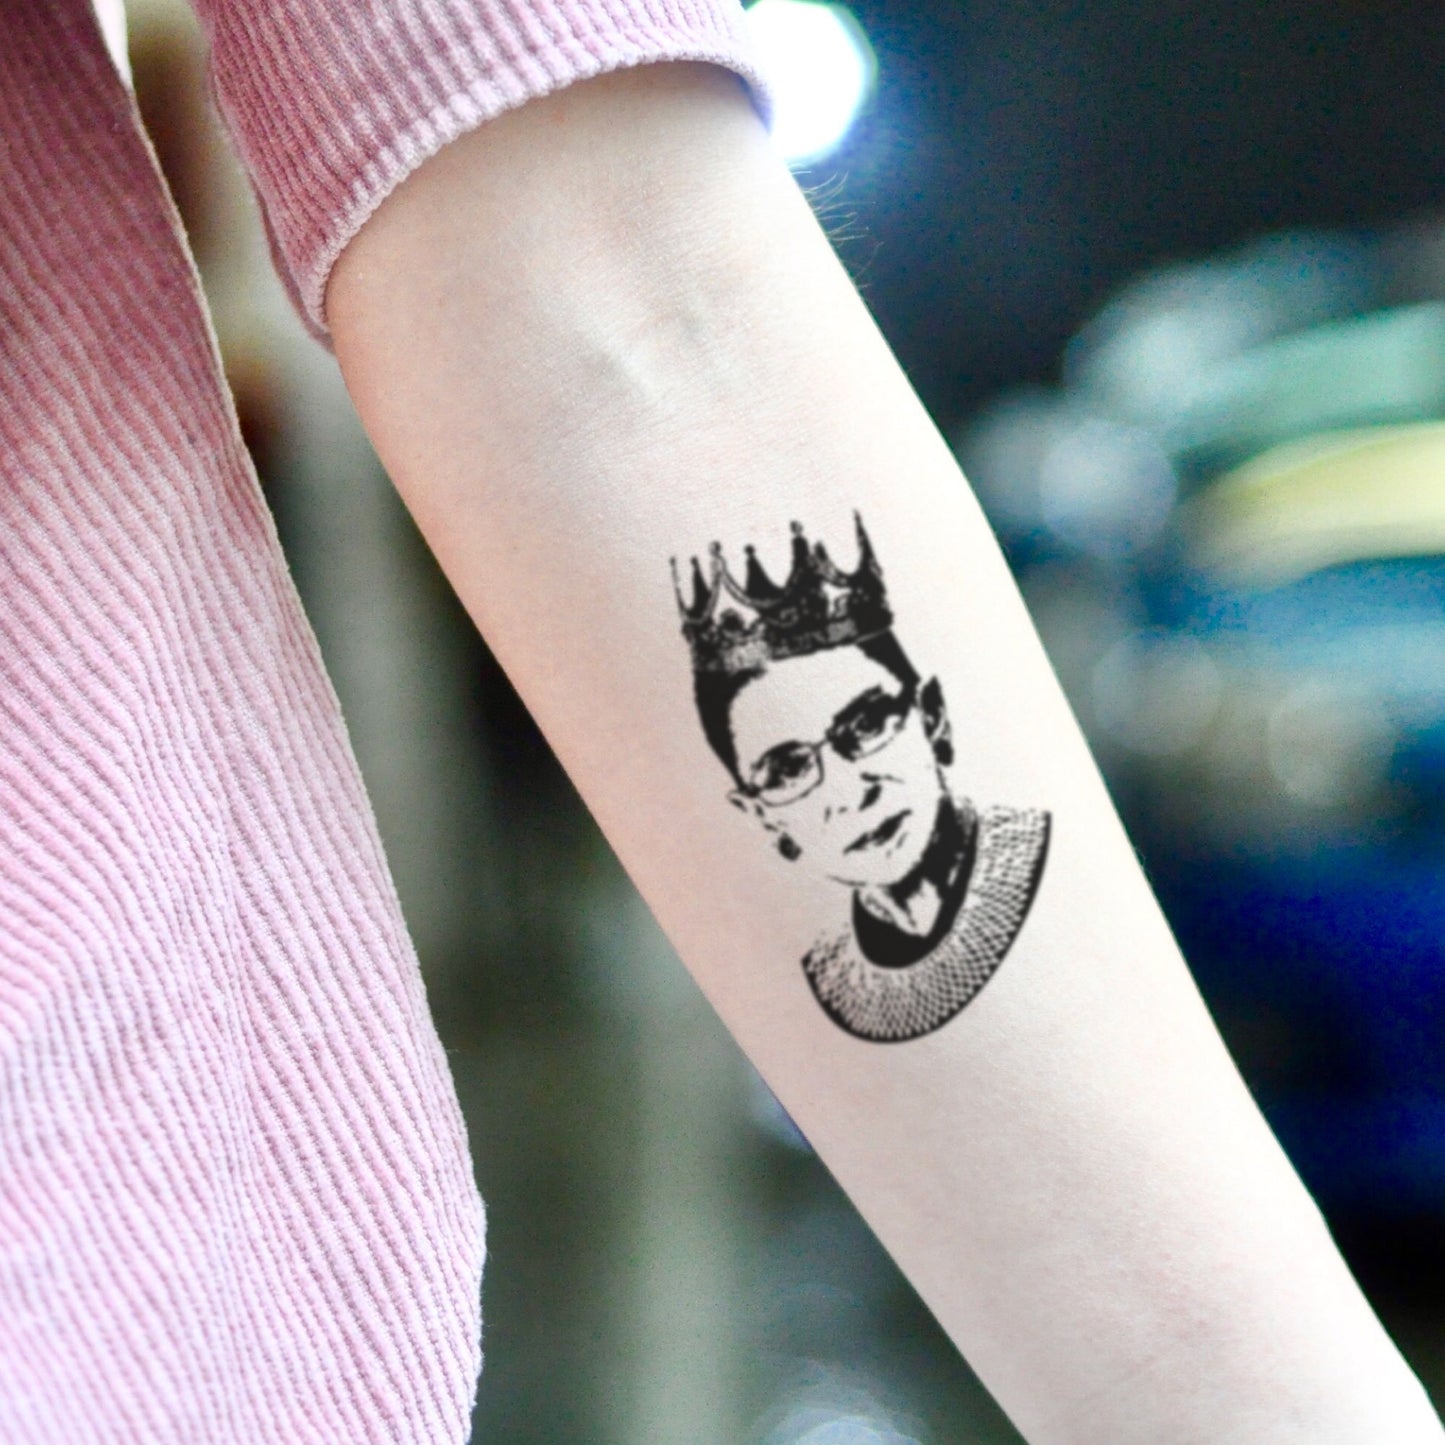 fake small rbg ruth bader ginsburg portrait temporary tattoo sticker design idea on inner arm